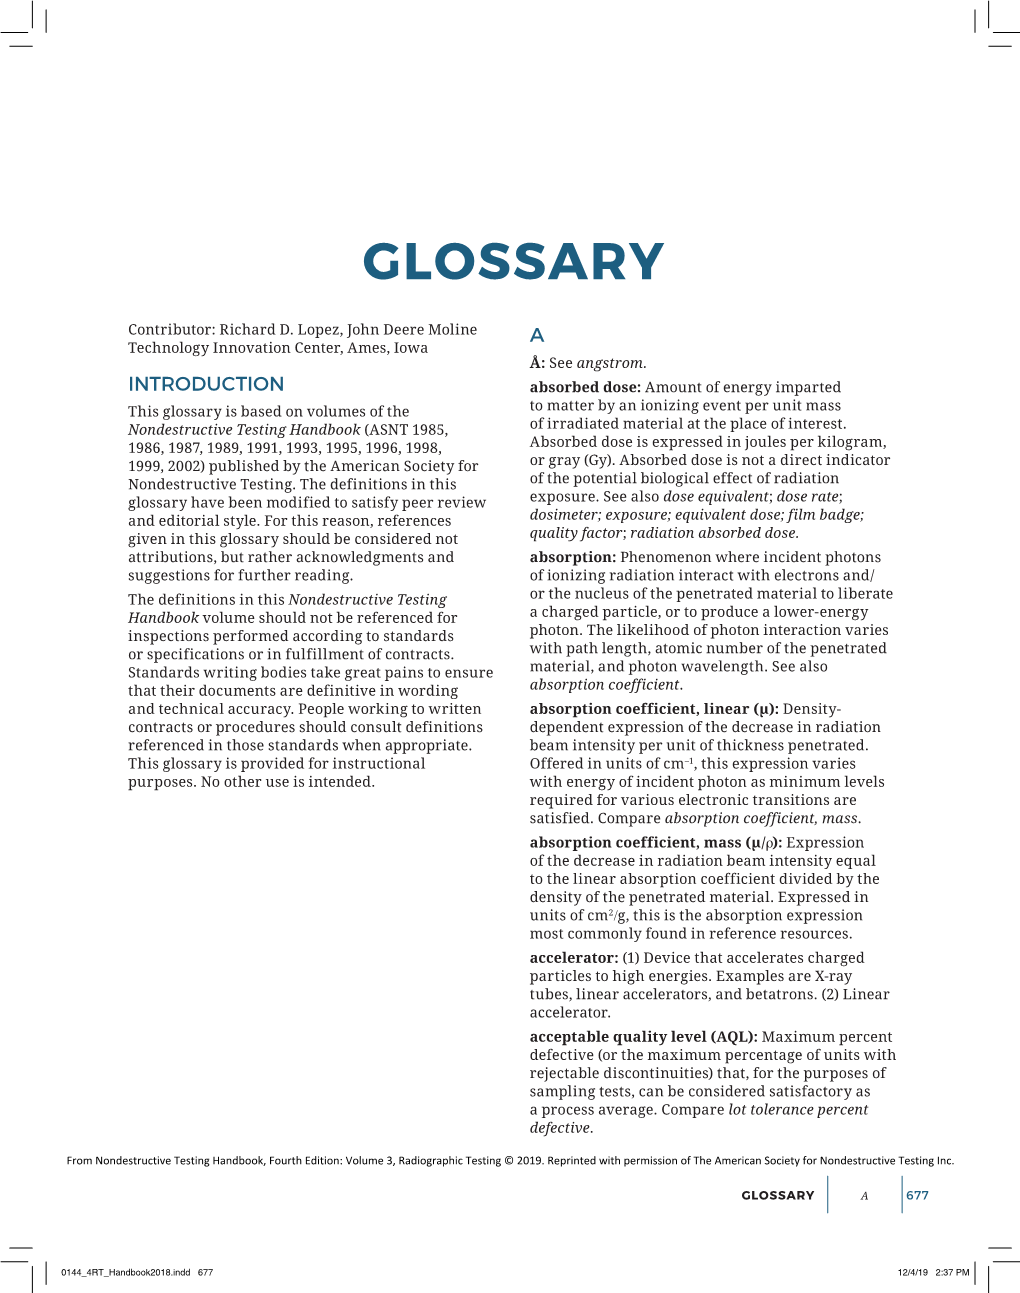 Nondestructive Testing Handbook Glossary, Fourth Edition